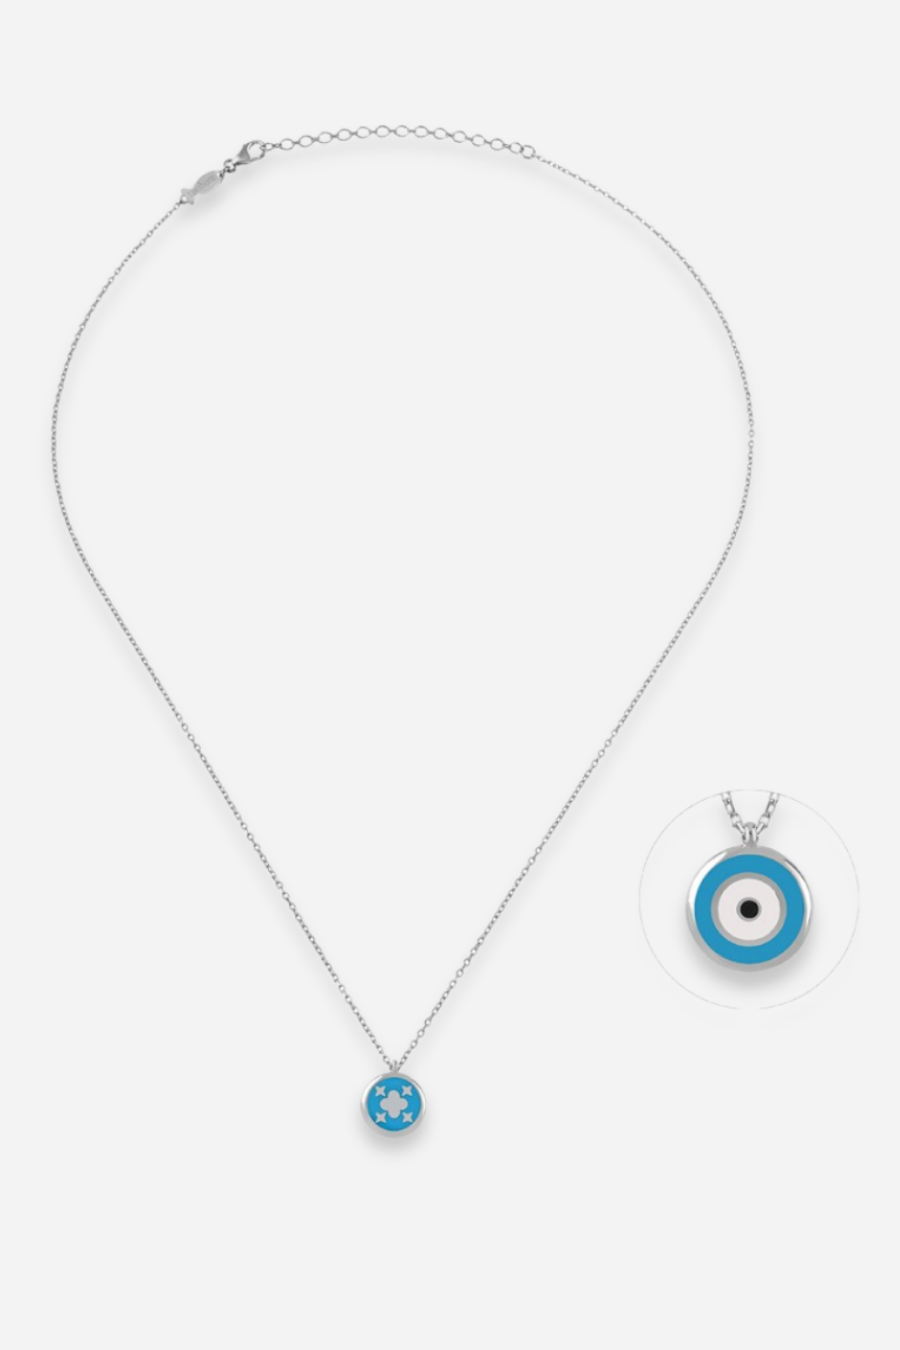 Reversible Clover/Eye Necklace